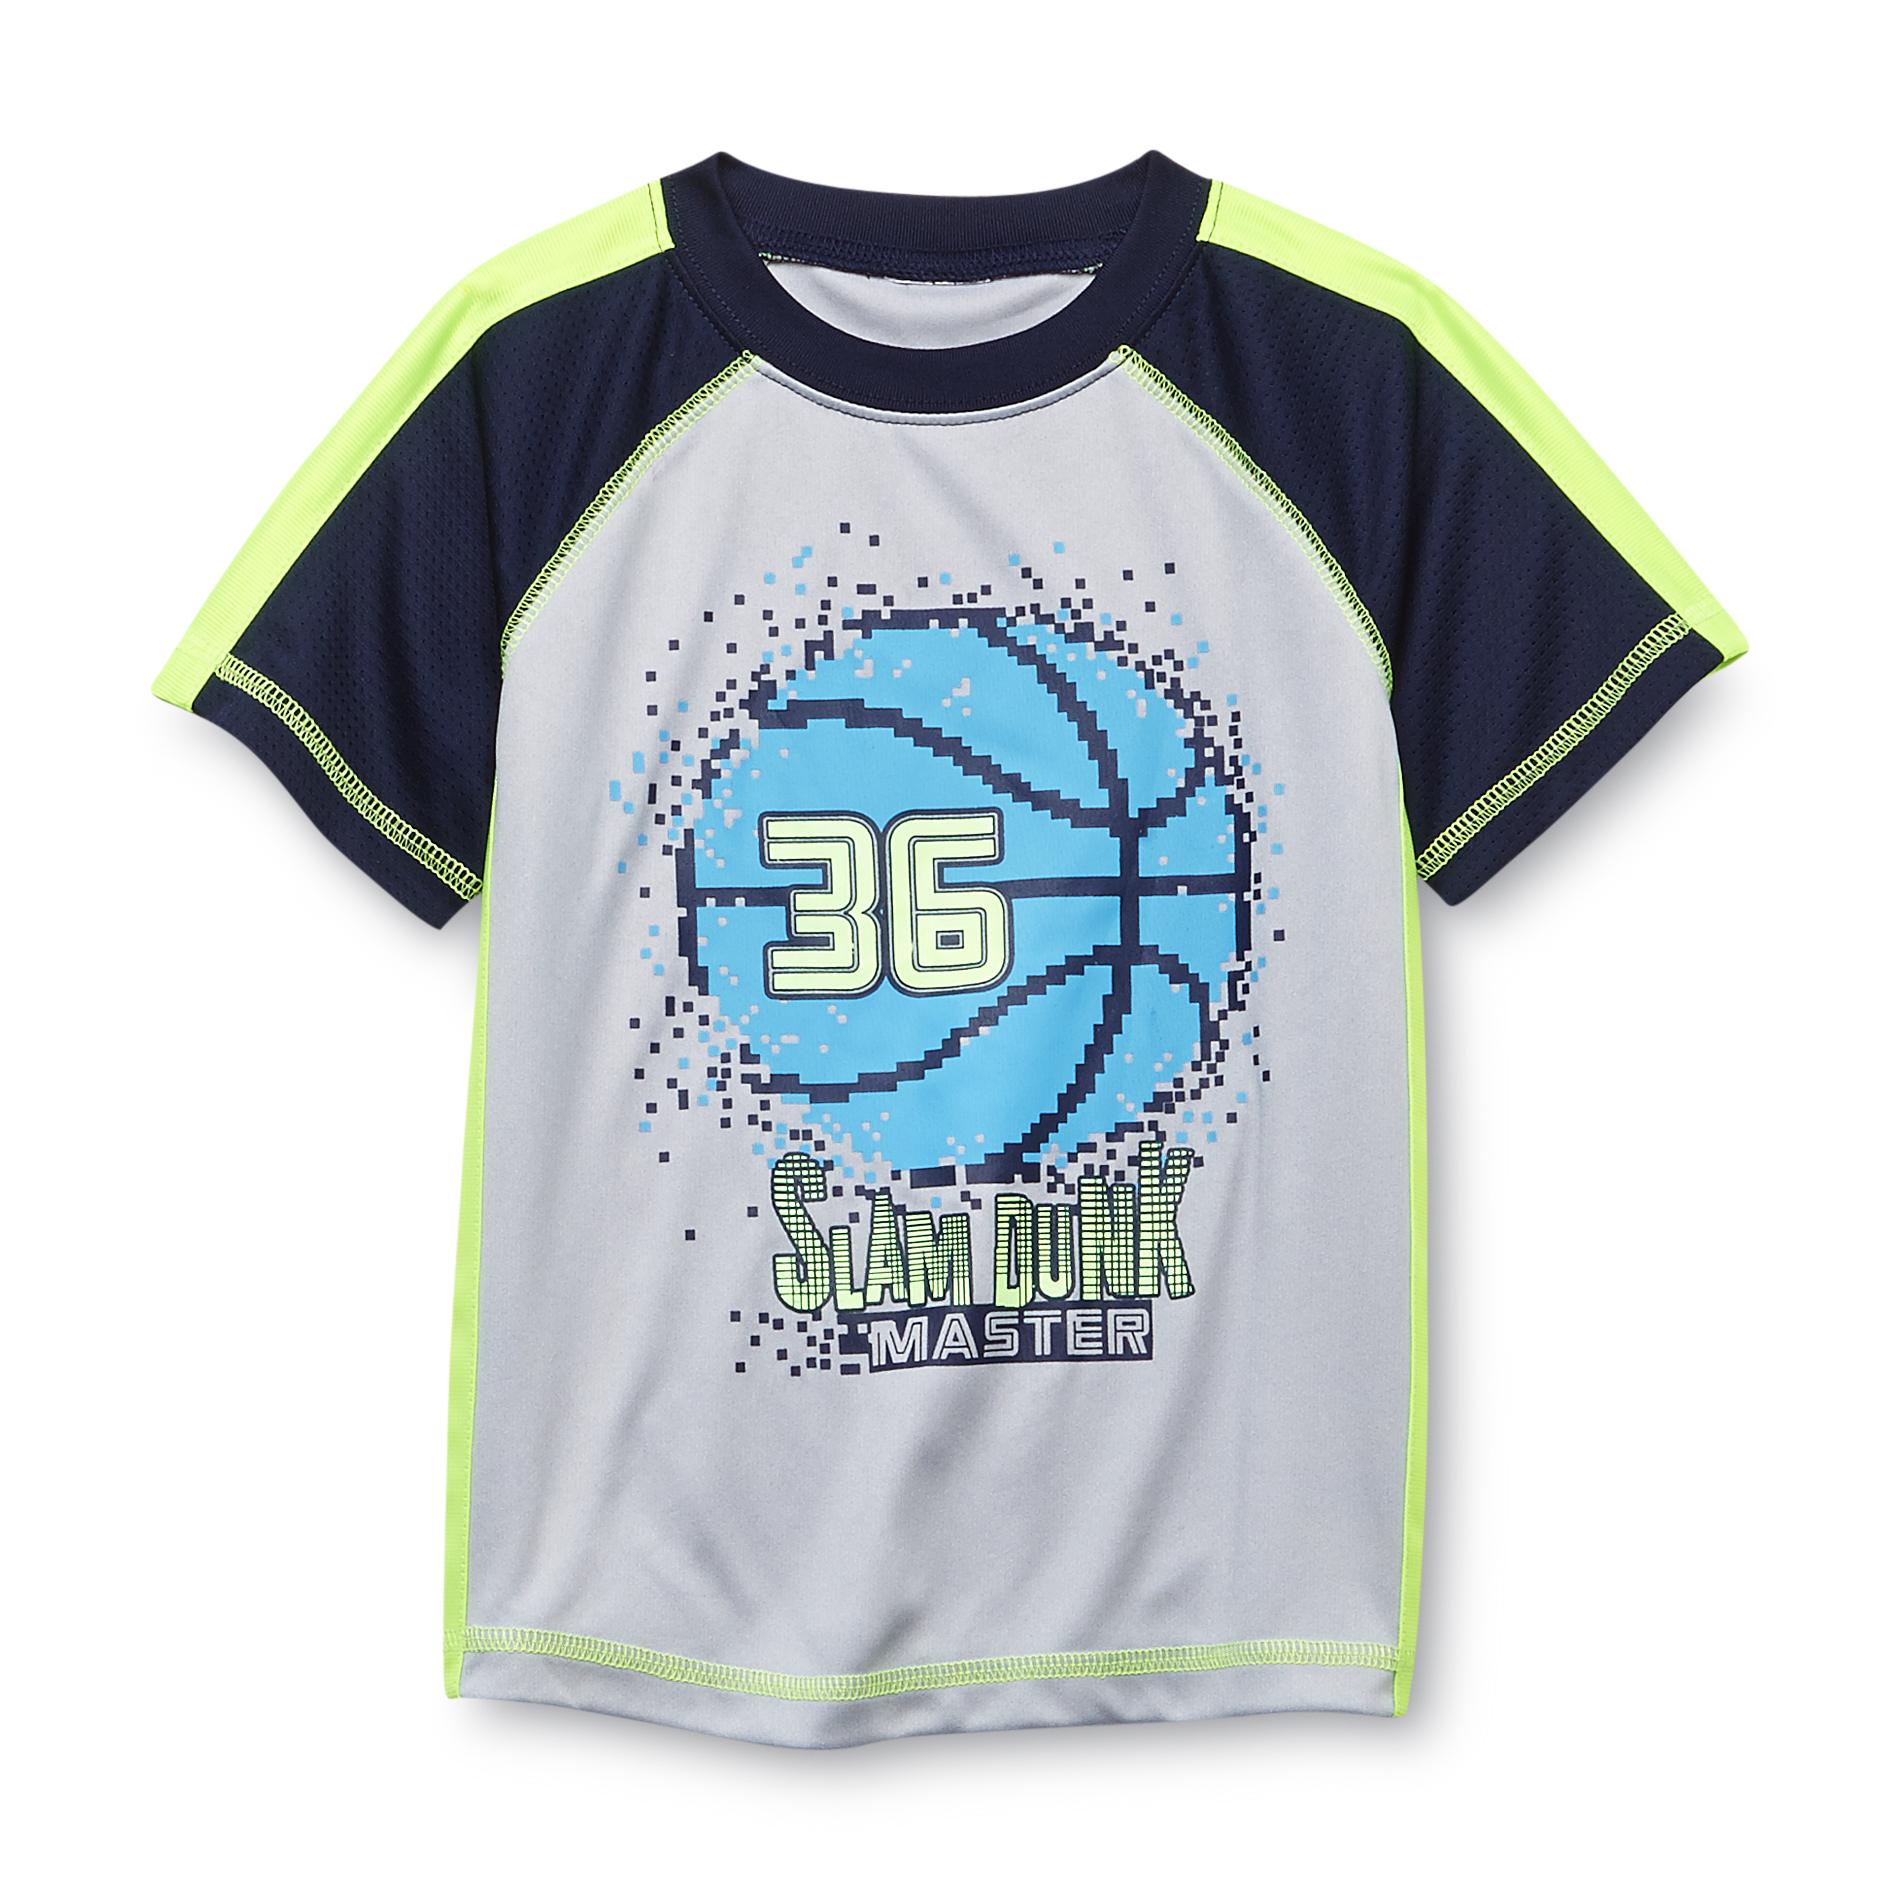 WonderKids Toddler Boy's Athletic T-Shirt - Basketball